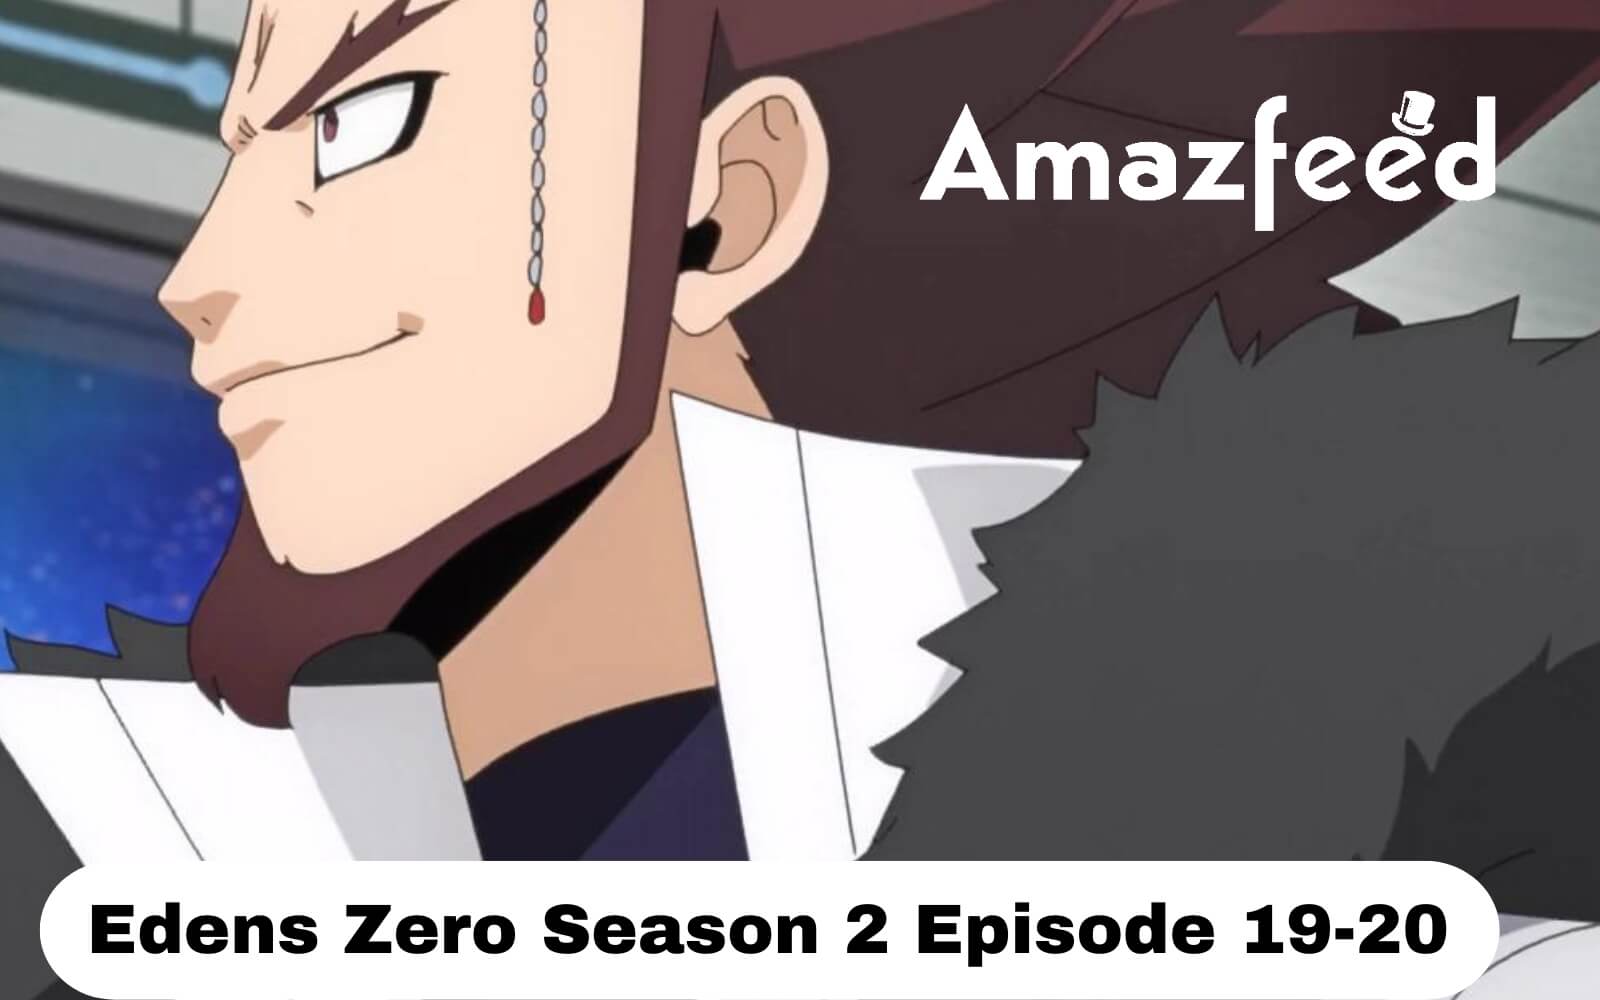 Edens Zero Season 2 Episode 4: Release date and time, countdown